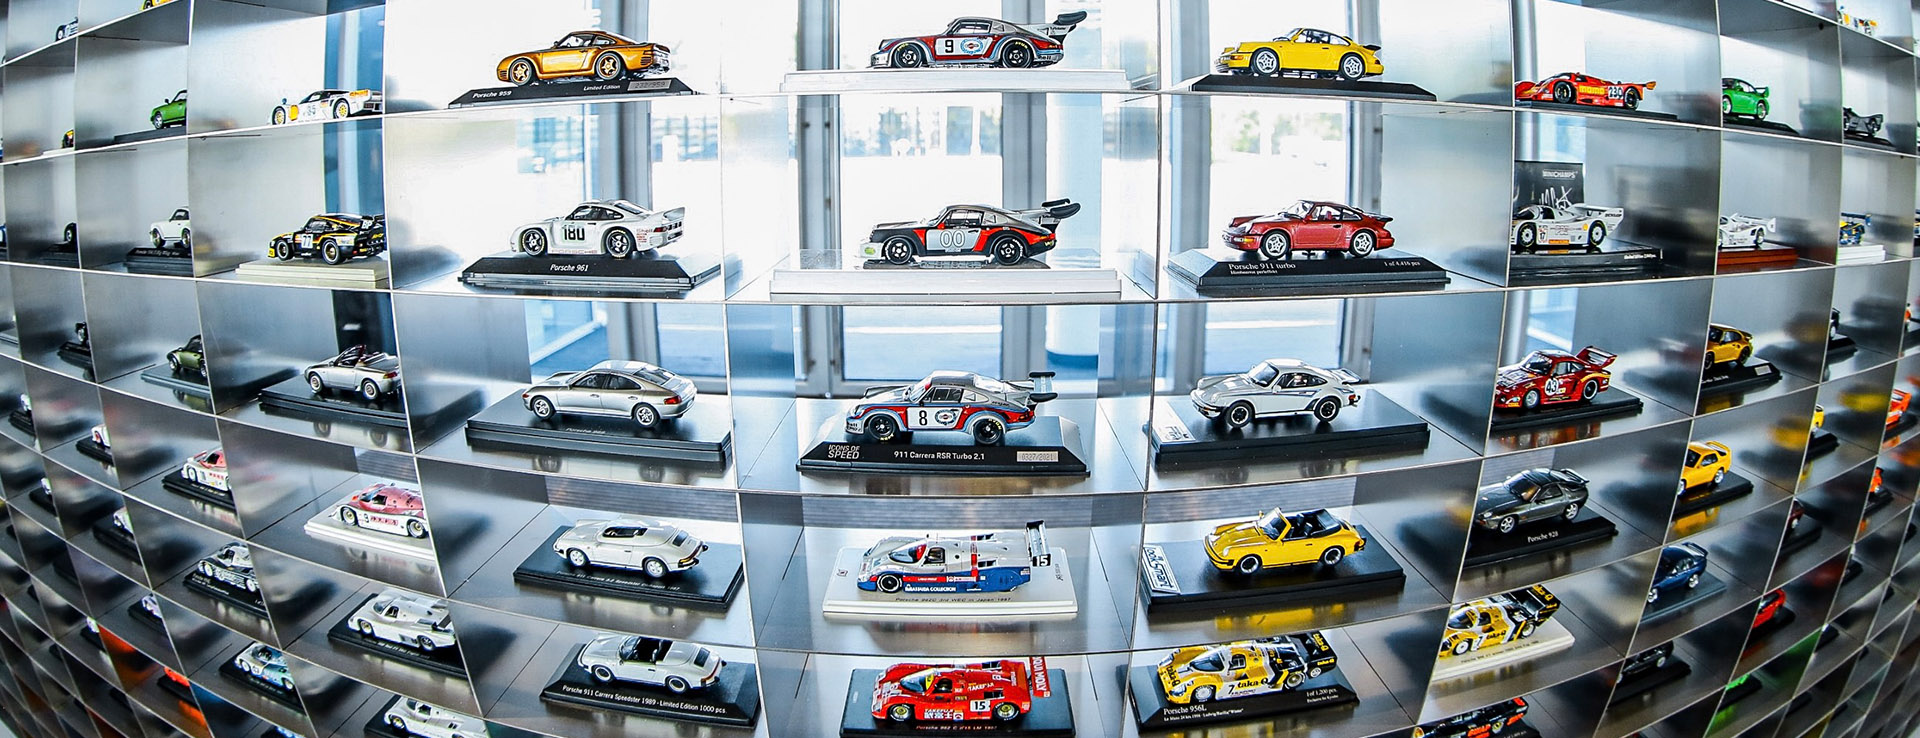 Line-up of Porsche model cars on display